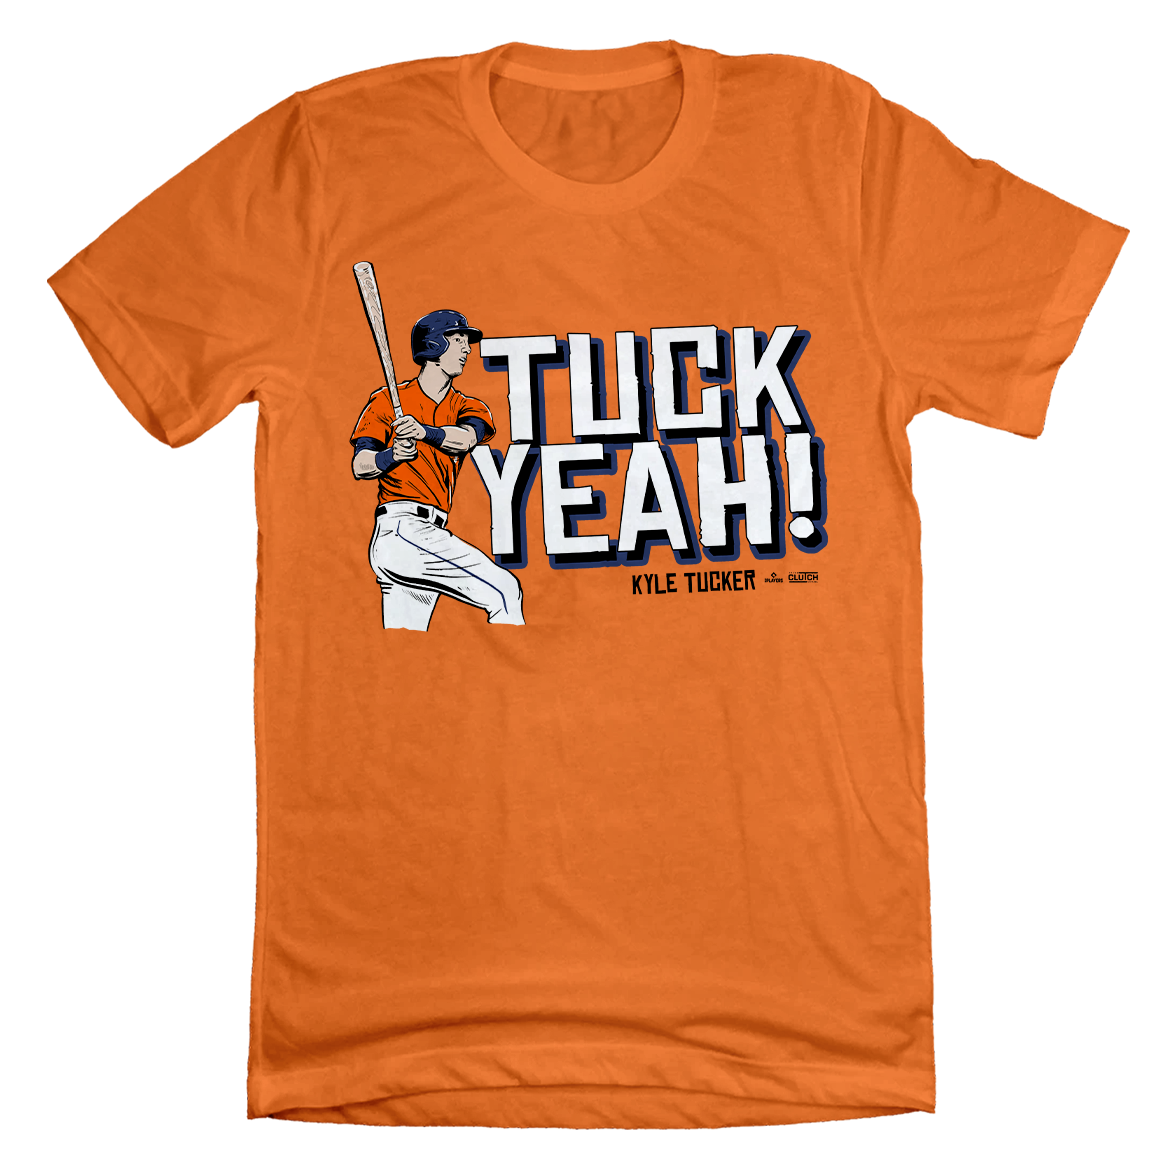 Kyle Tucker Tuck Yeah MLBPA Tee orange